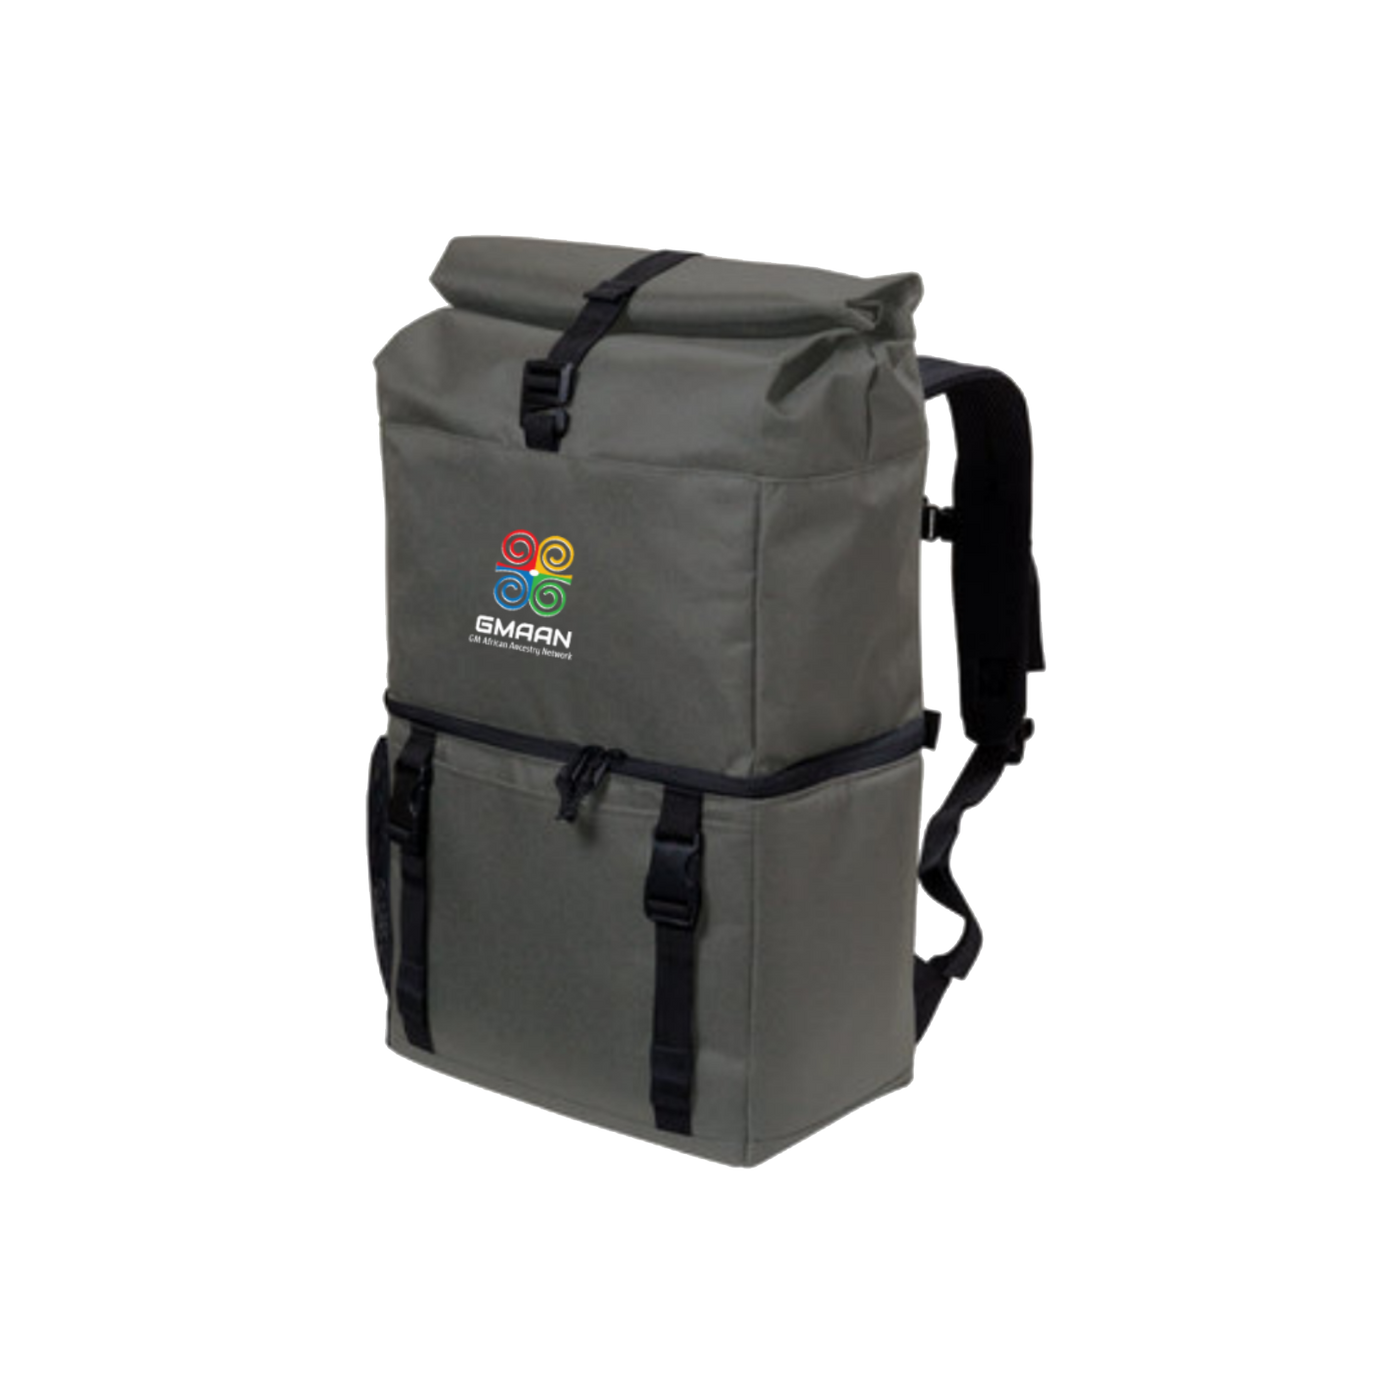 GM GMAAN ERG Backpack Cooler